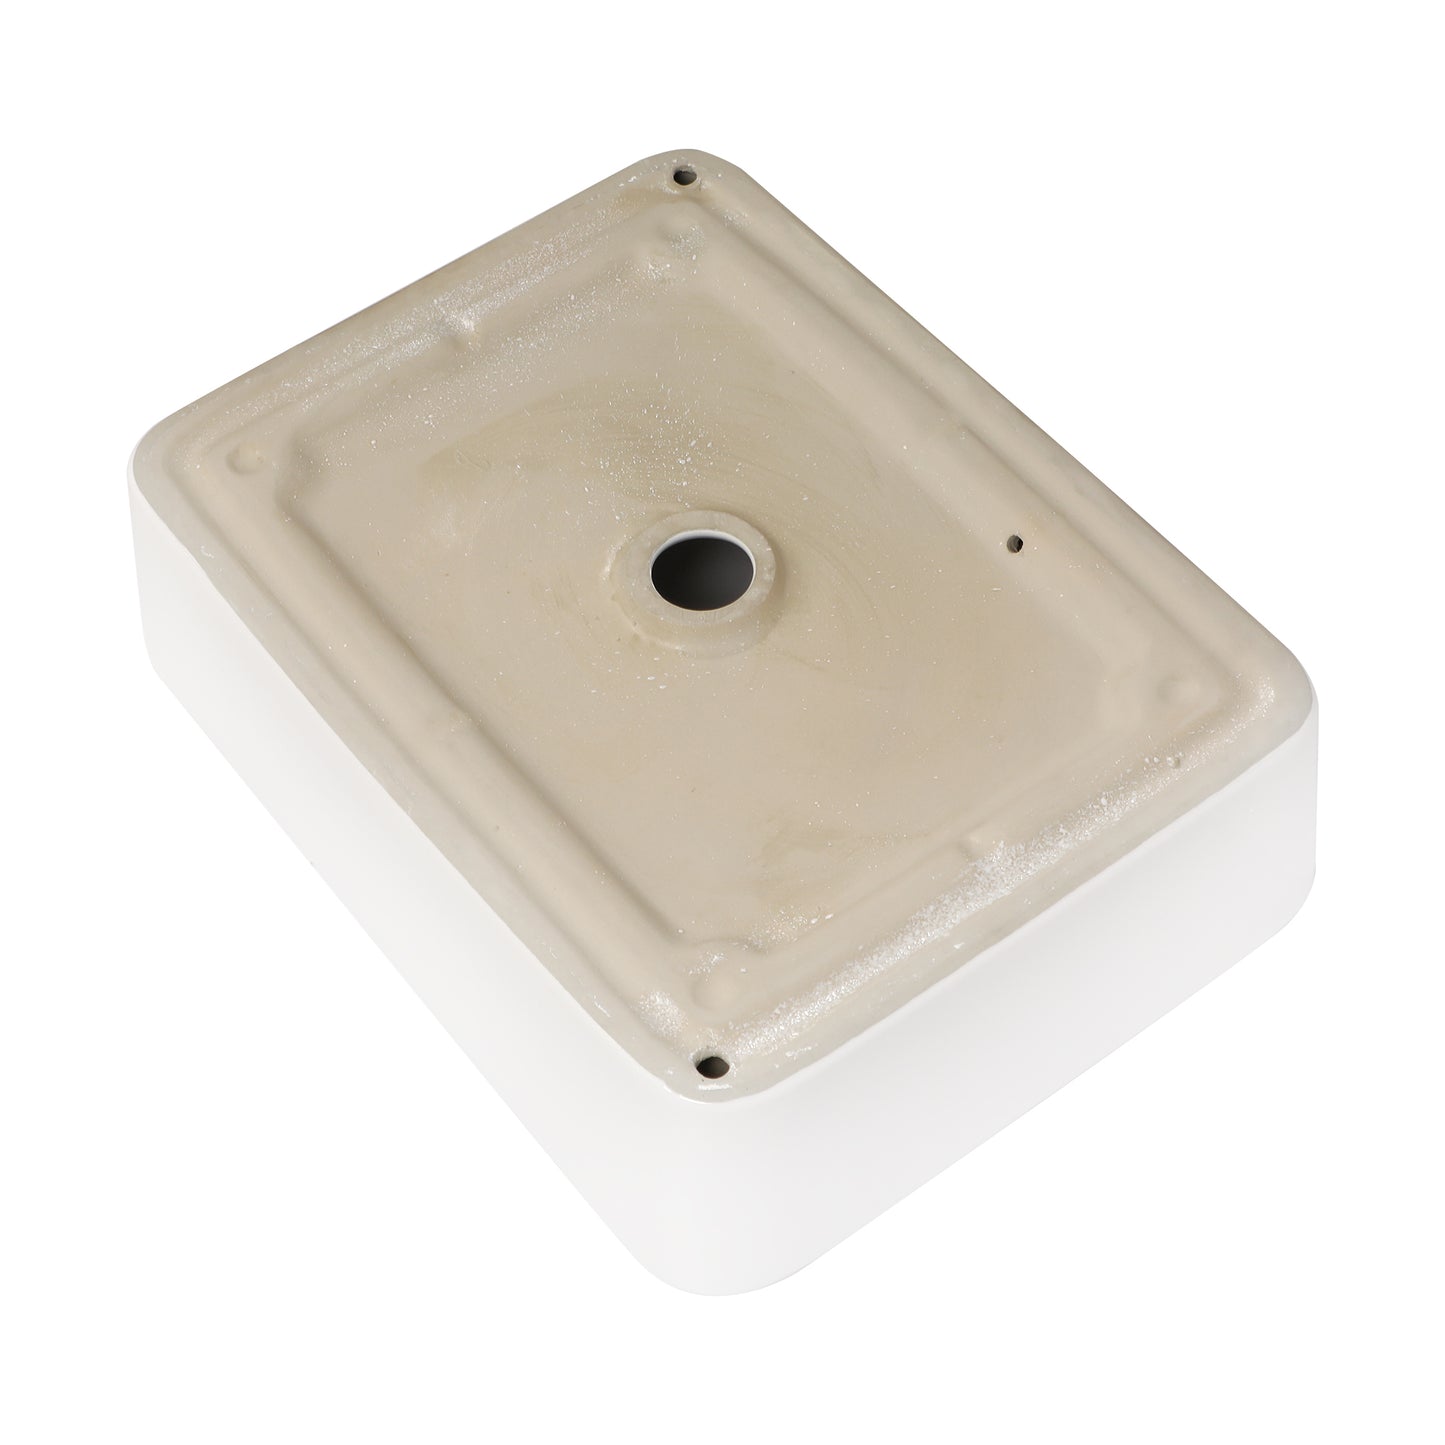 19"x15" White Ceramic Rectangular Vessel Bathroom Sink